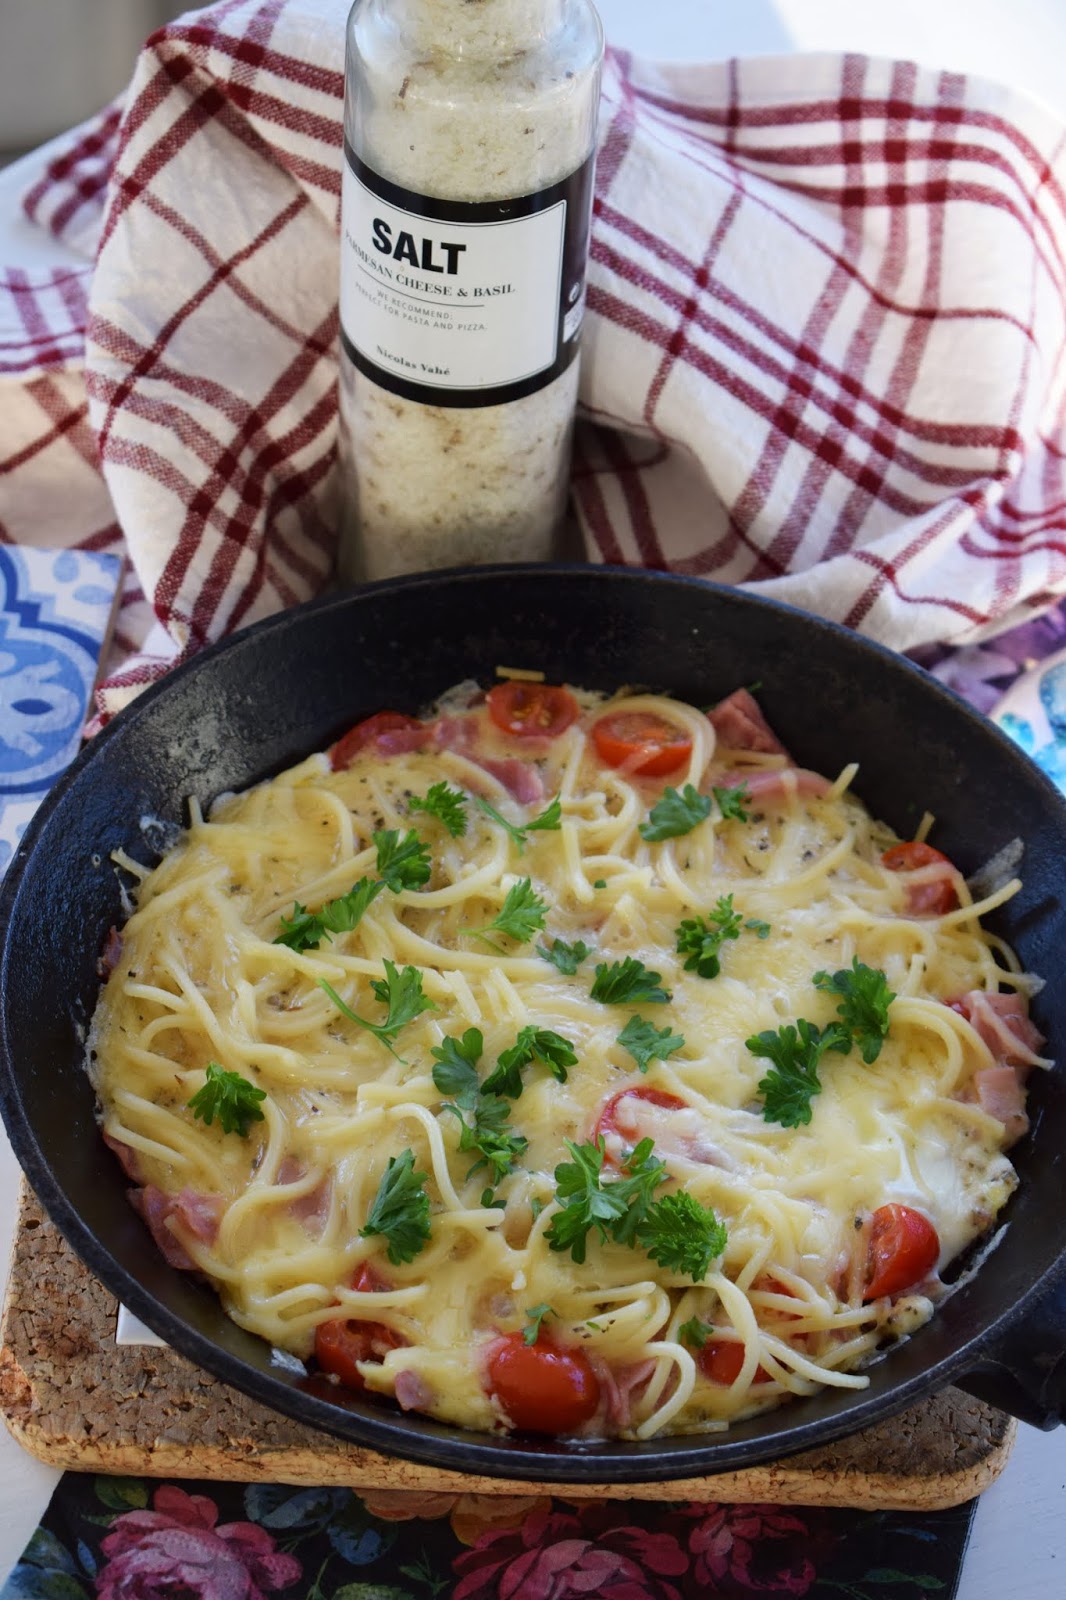 Smaskelismaskens: Omelett med spaghetti, skinka och tomater